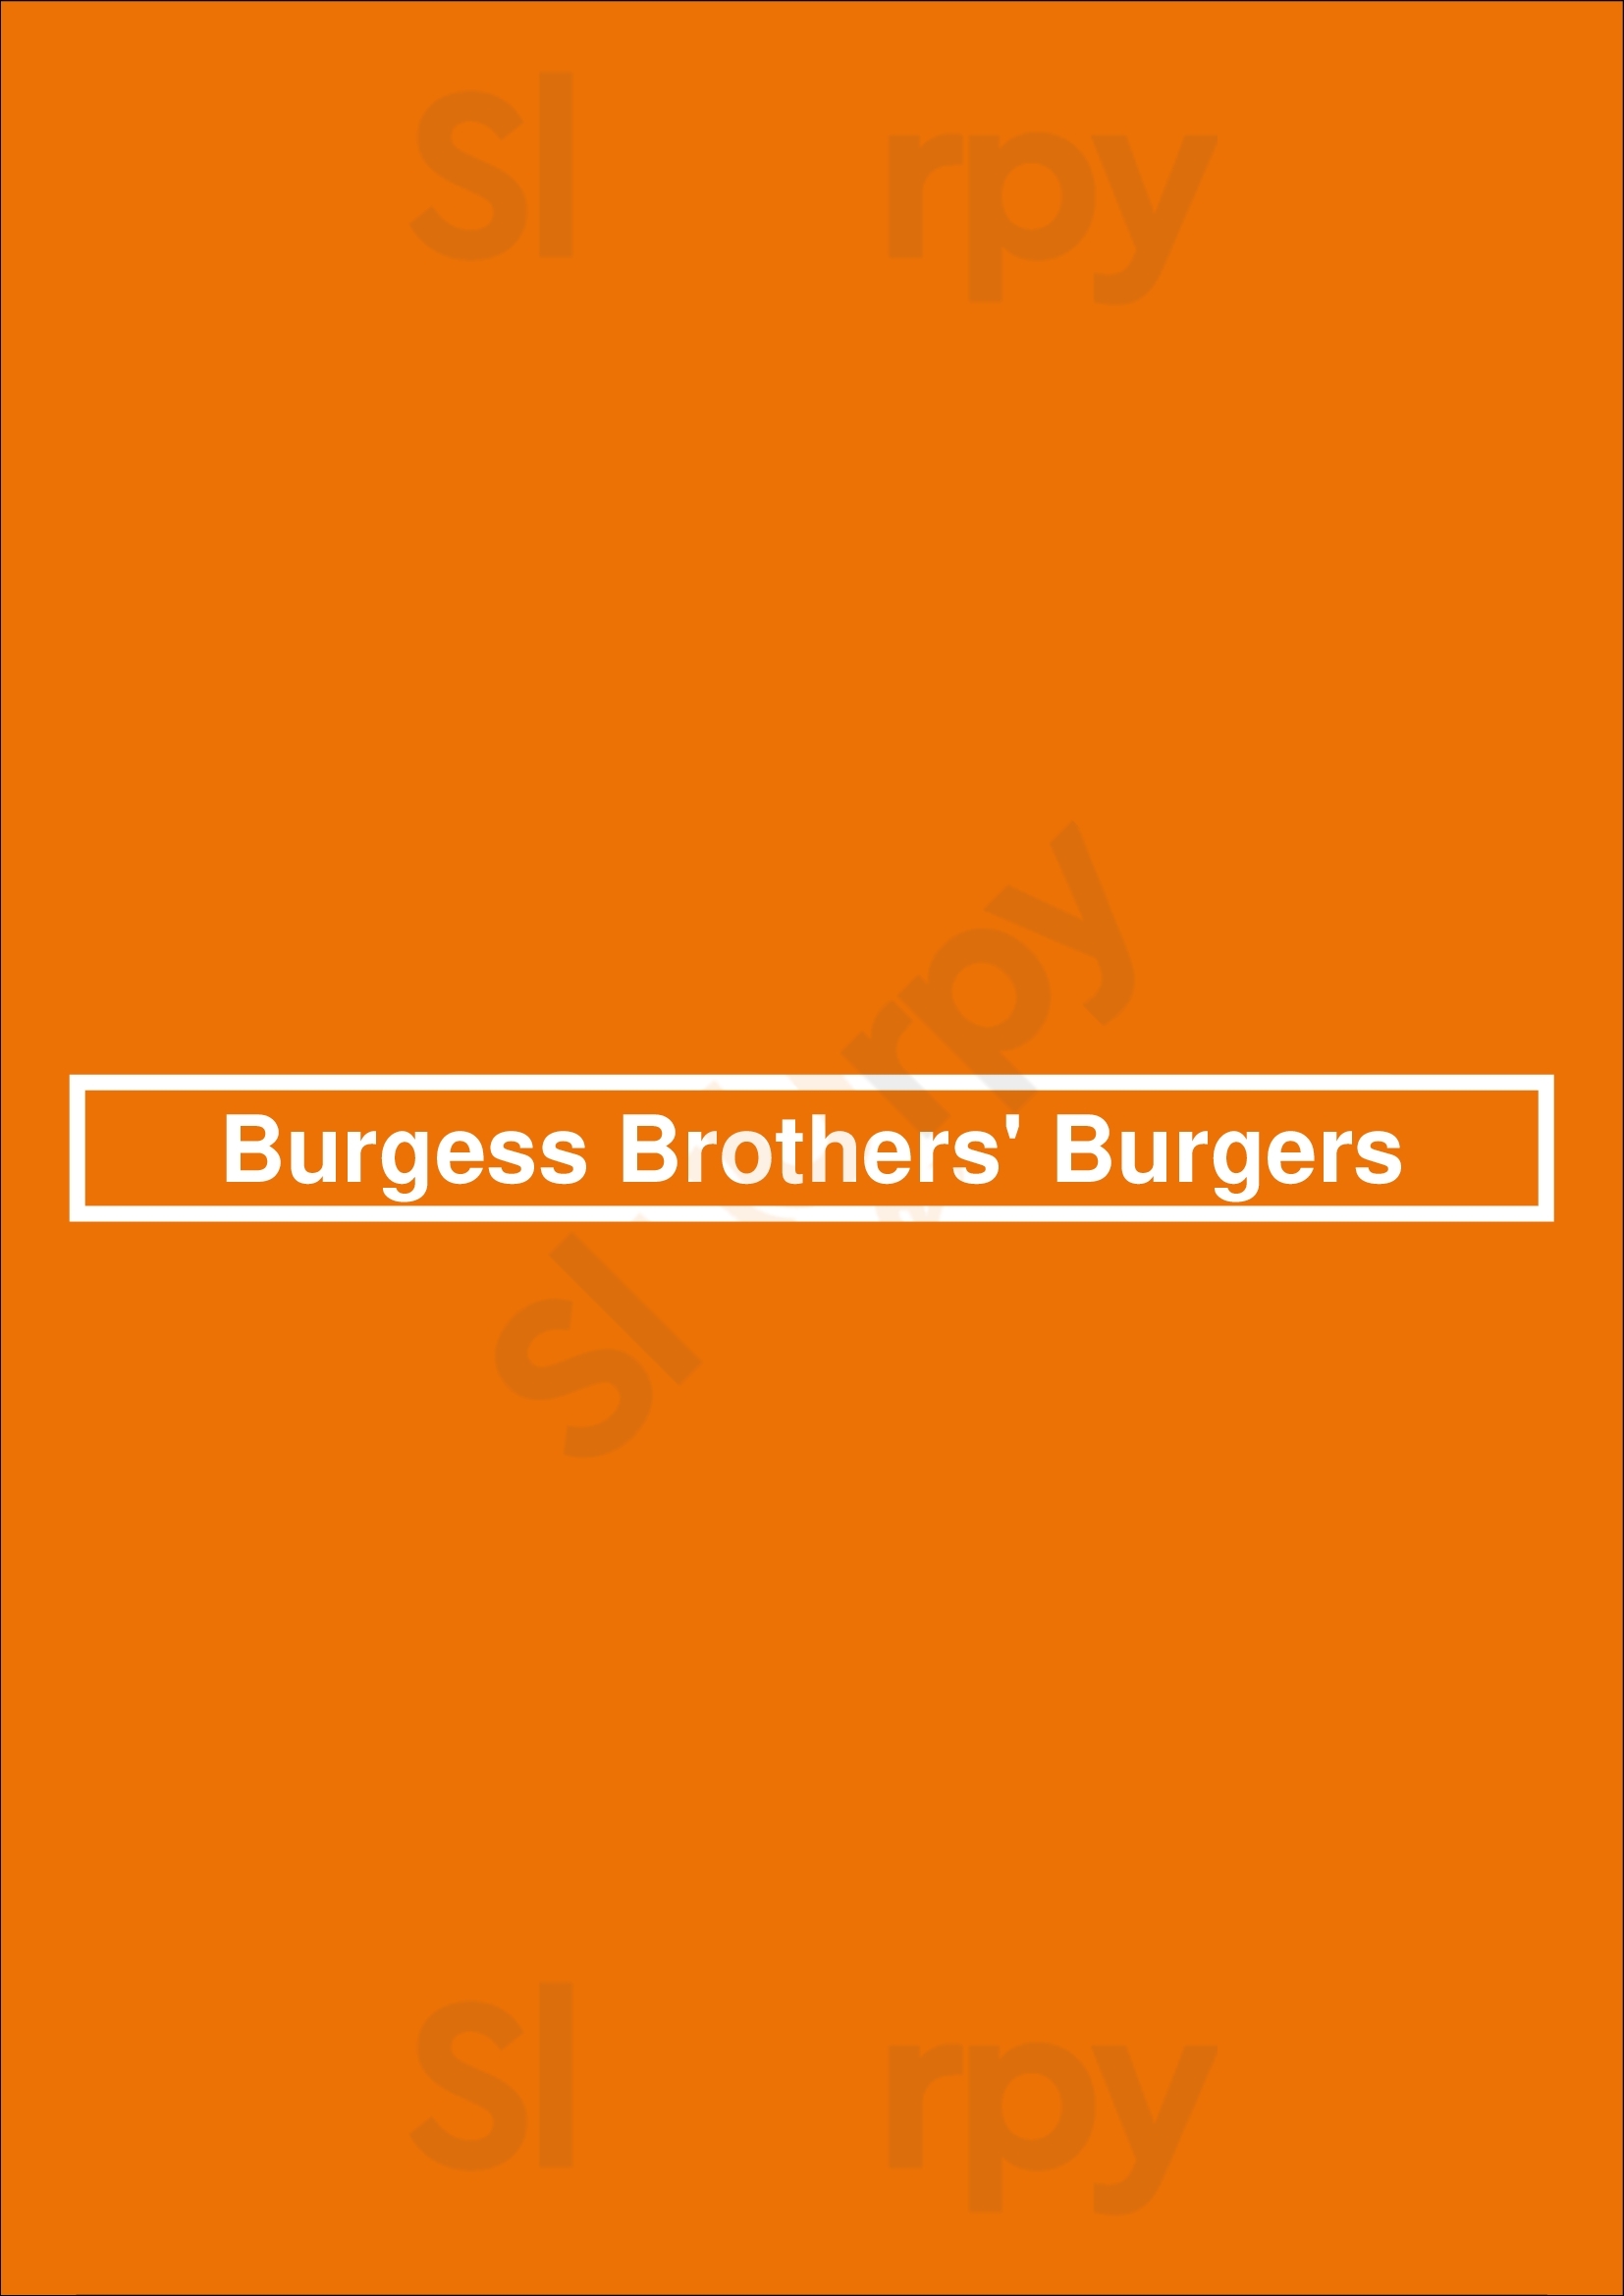 Burgess Brothers Bbq And Burgers Sacramento Menu - 1